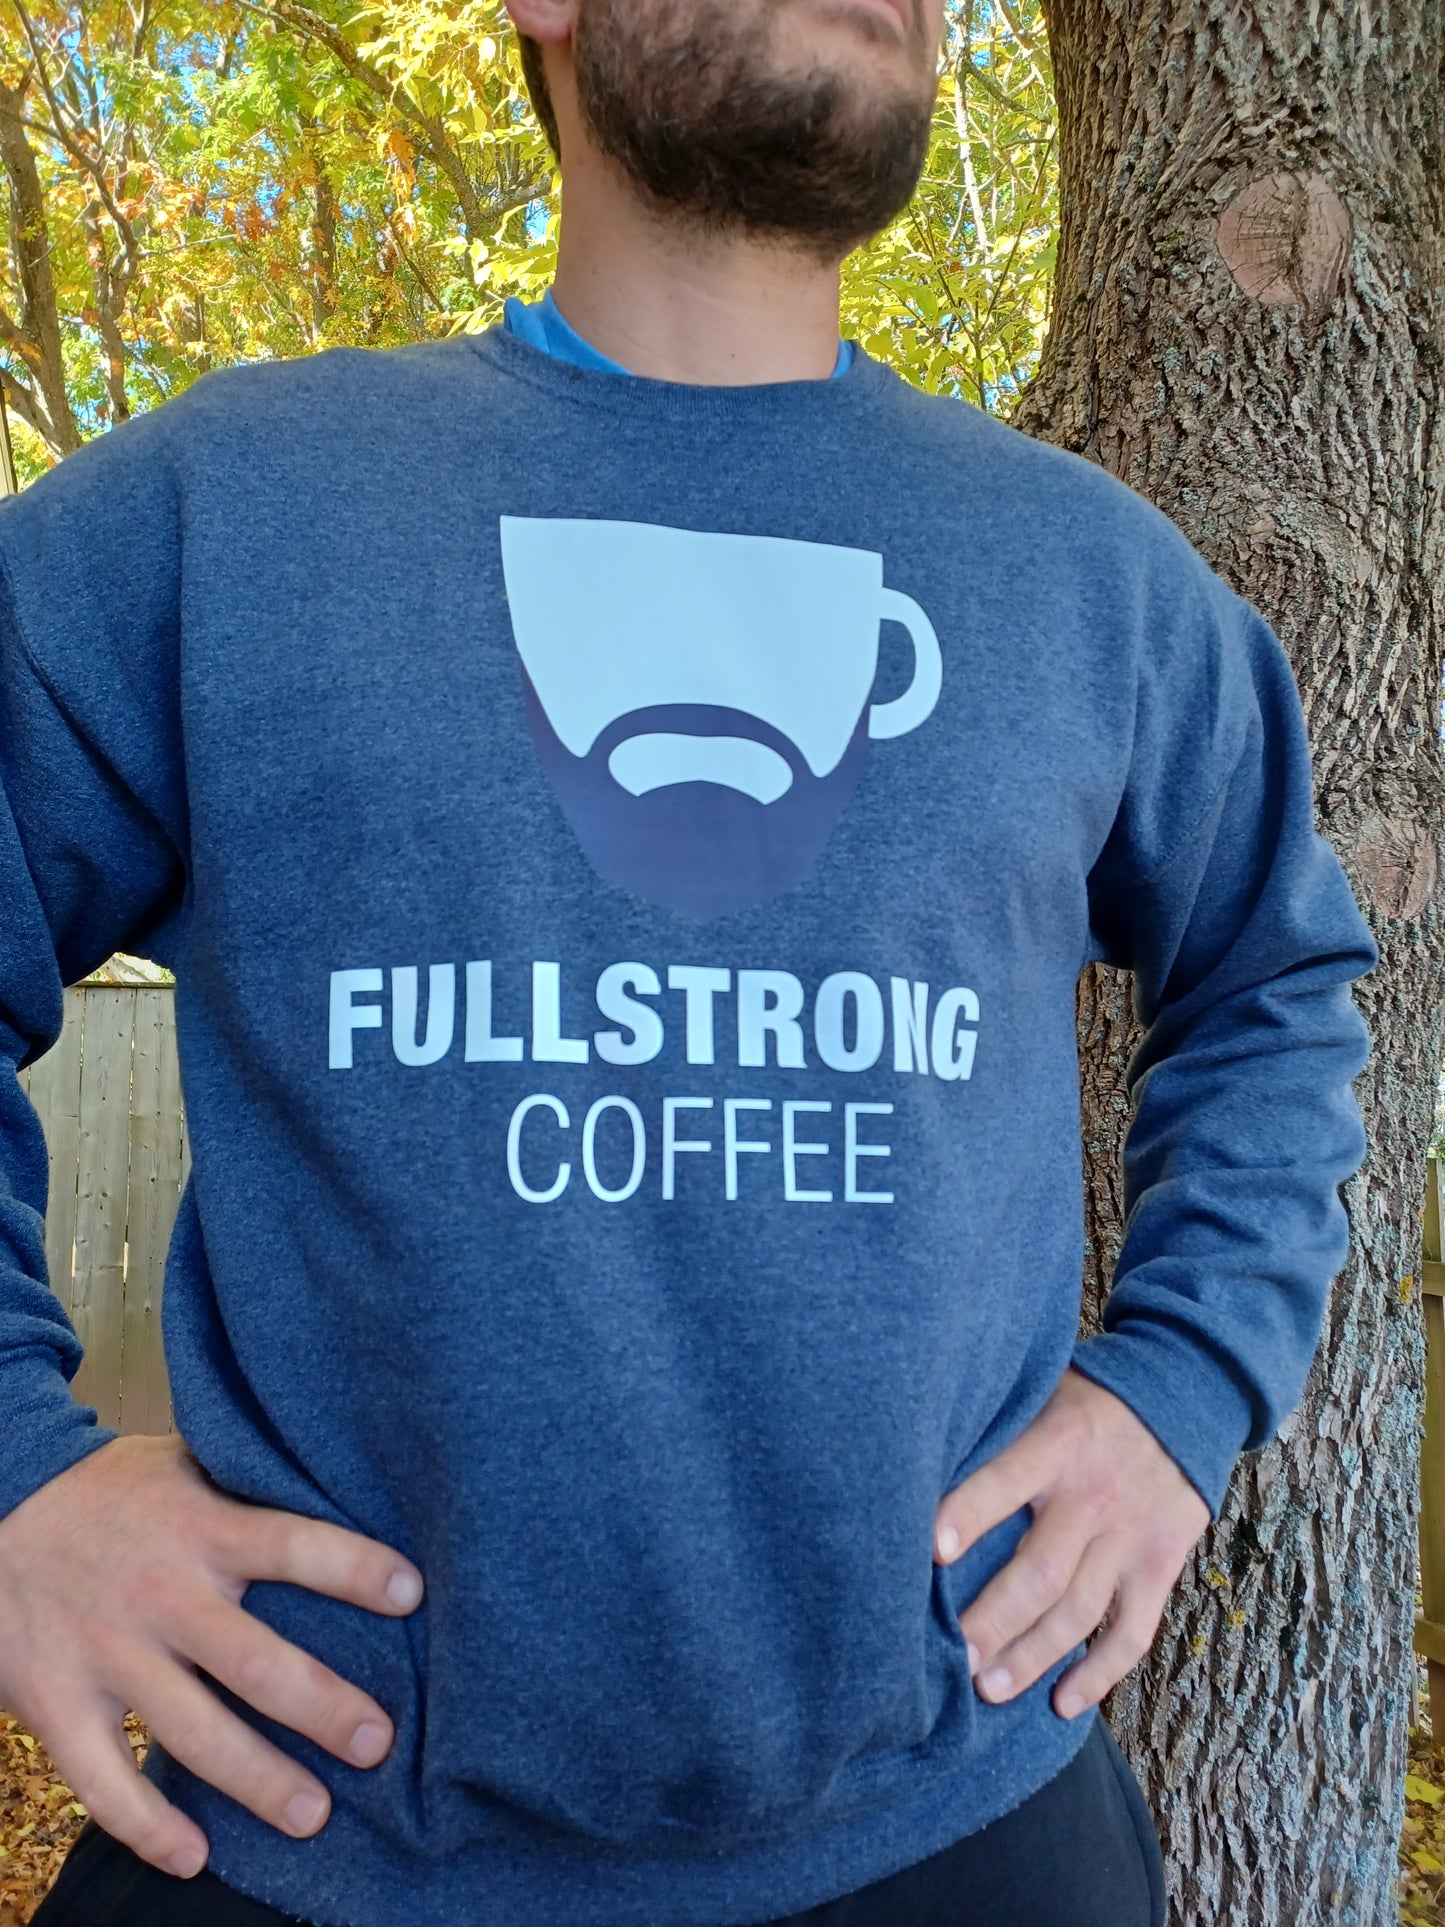 Fullstrong Coffee Sweater